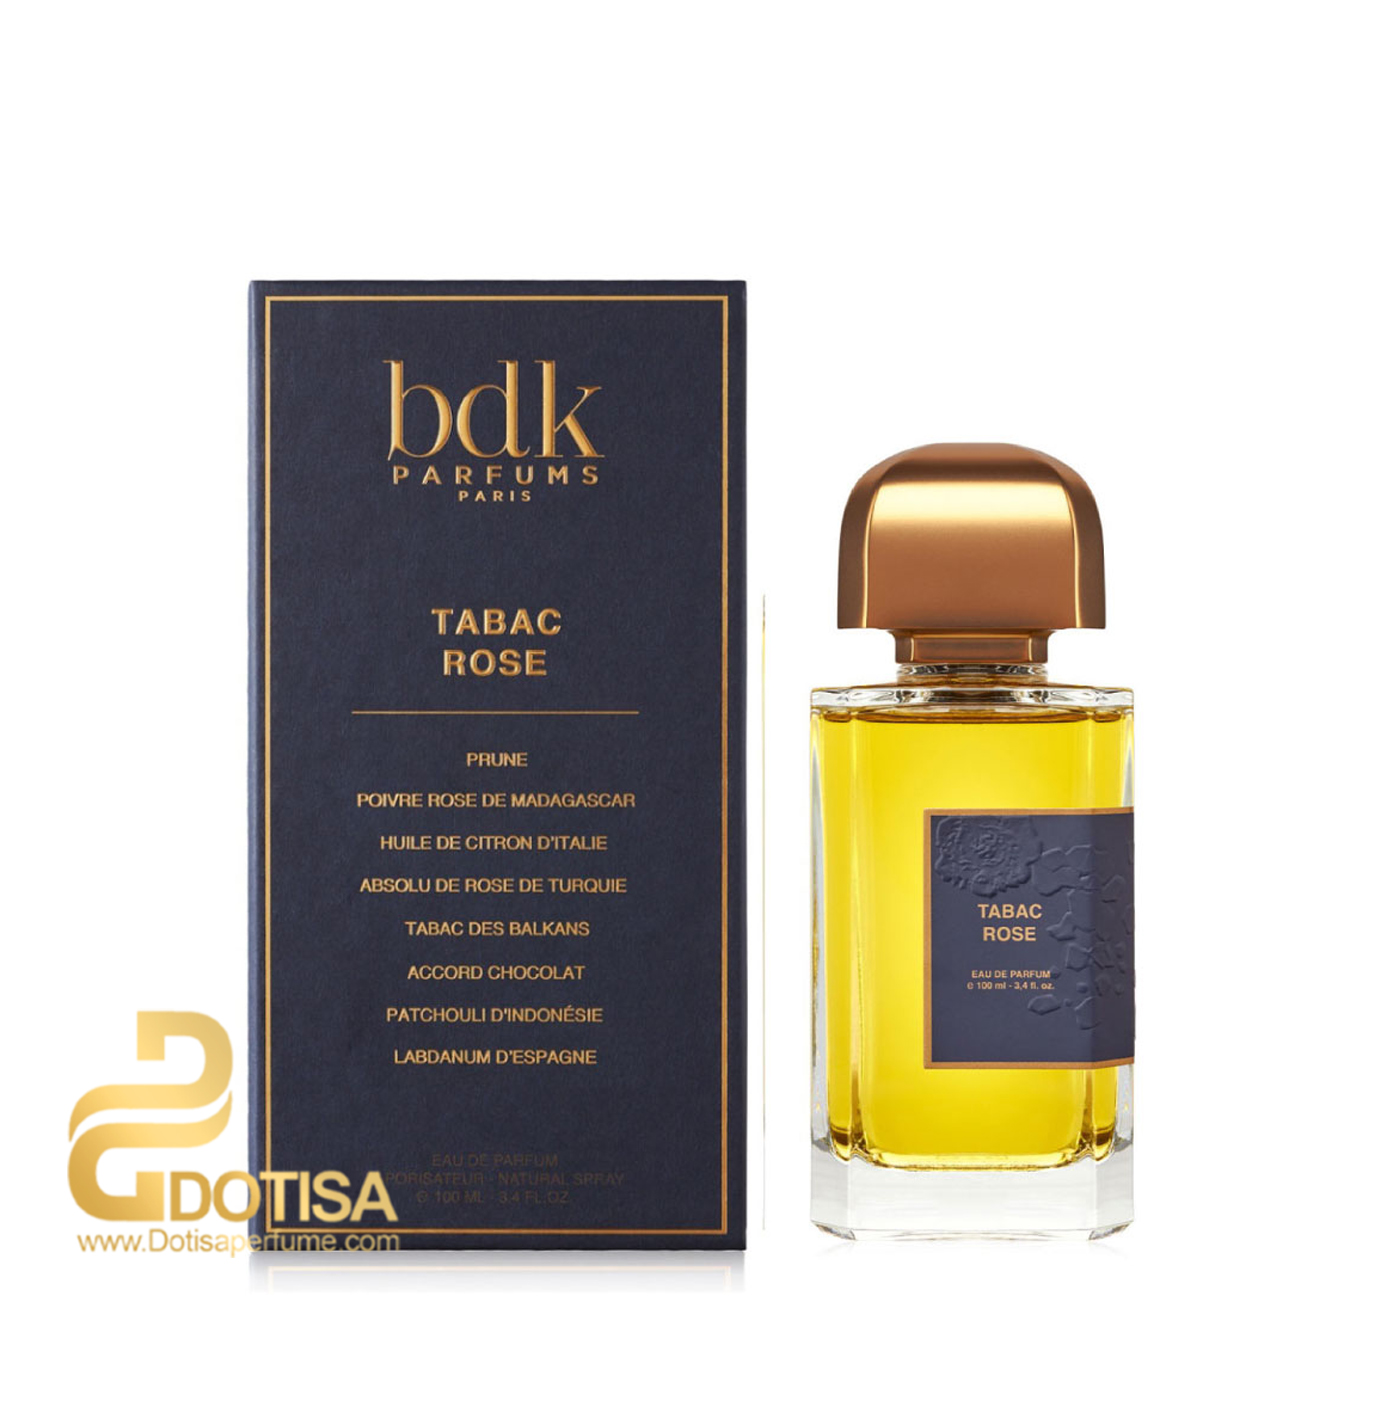 عطر ادکلن بی دی کی پاریس تاباک رز | Tabac Rose BDK Parfums for women and men